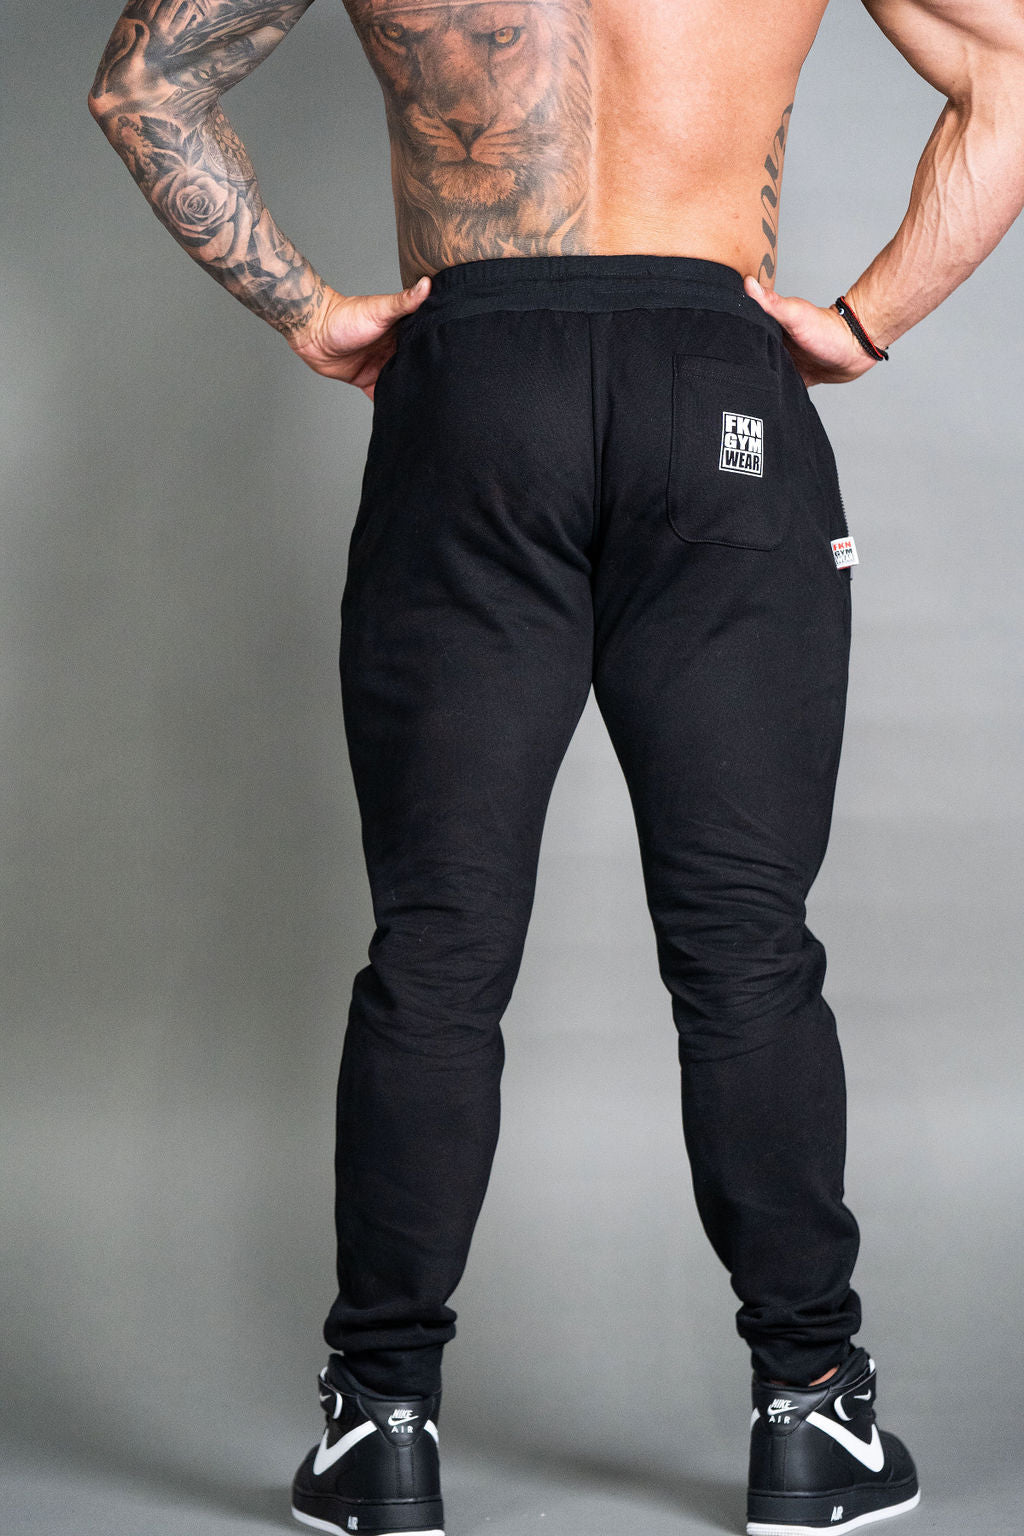 Track Pants for Men/ Lower for Men/Gym track pant